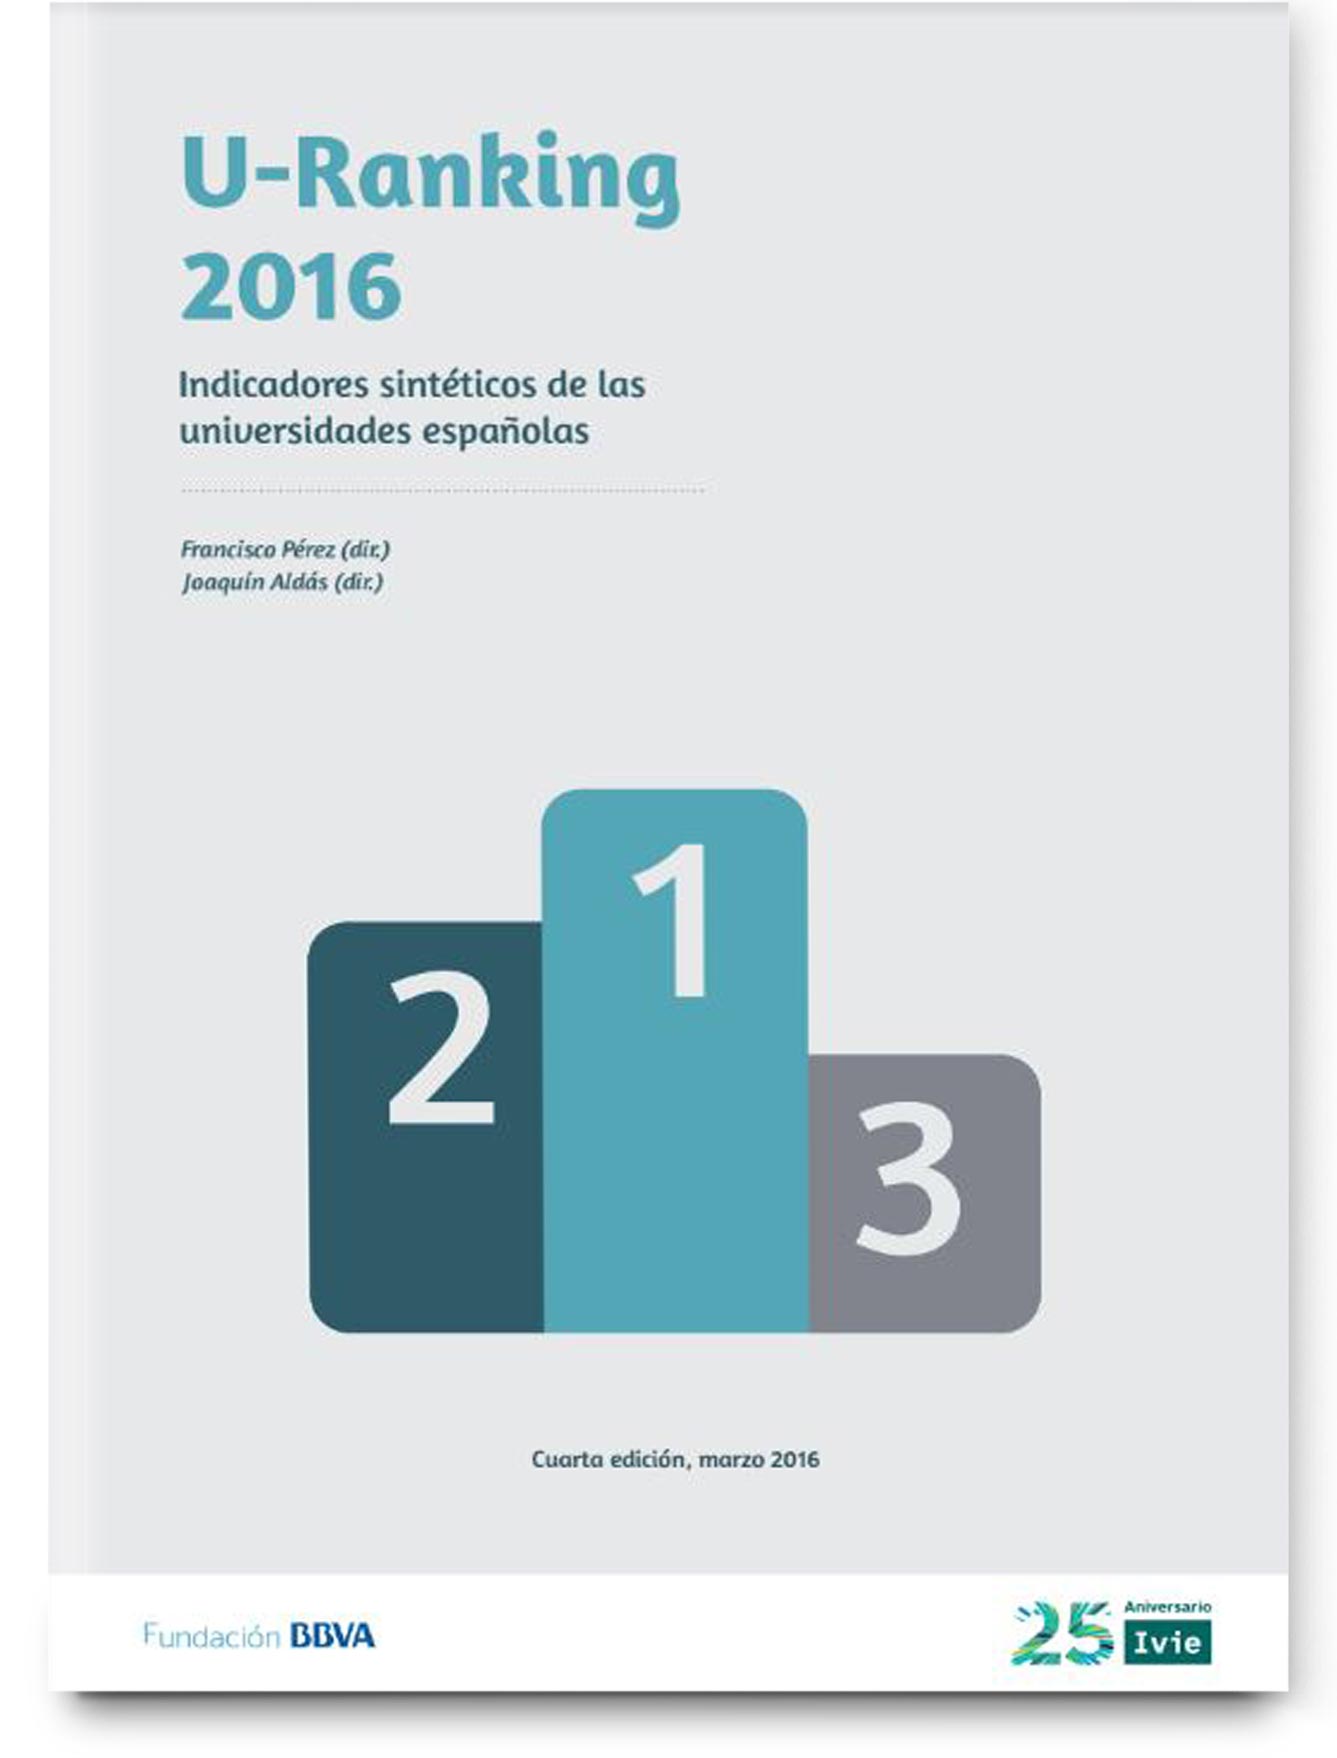 U-Ranking Project 2016: Performance indicators of Spanish universities